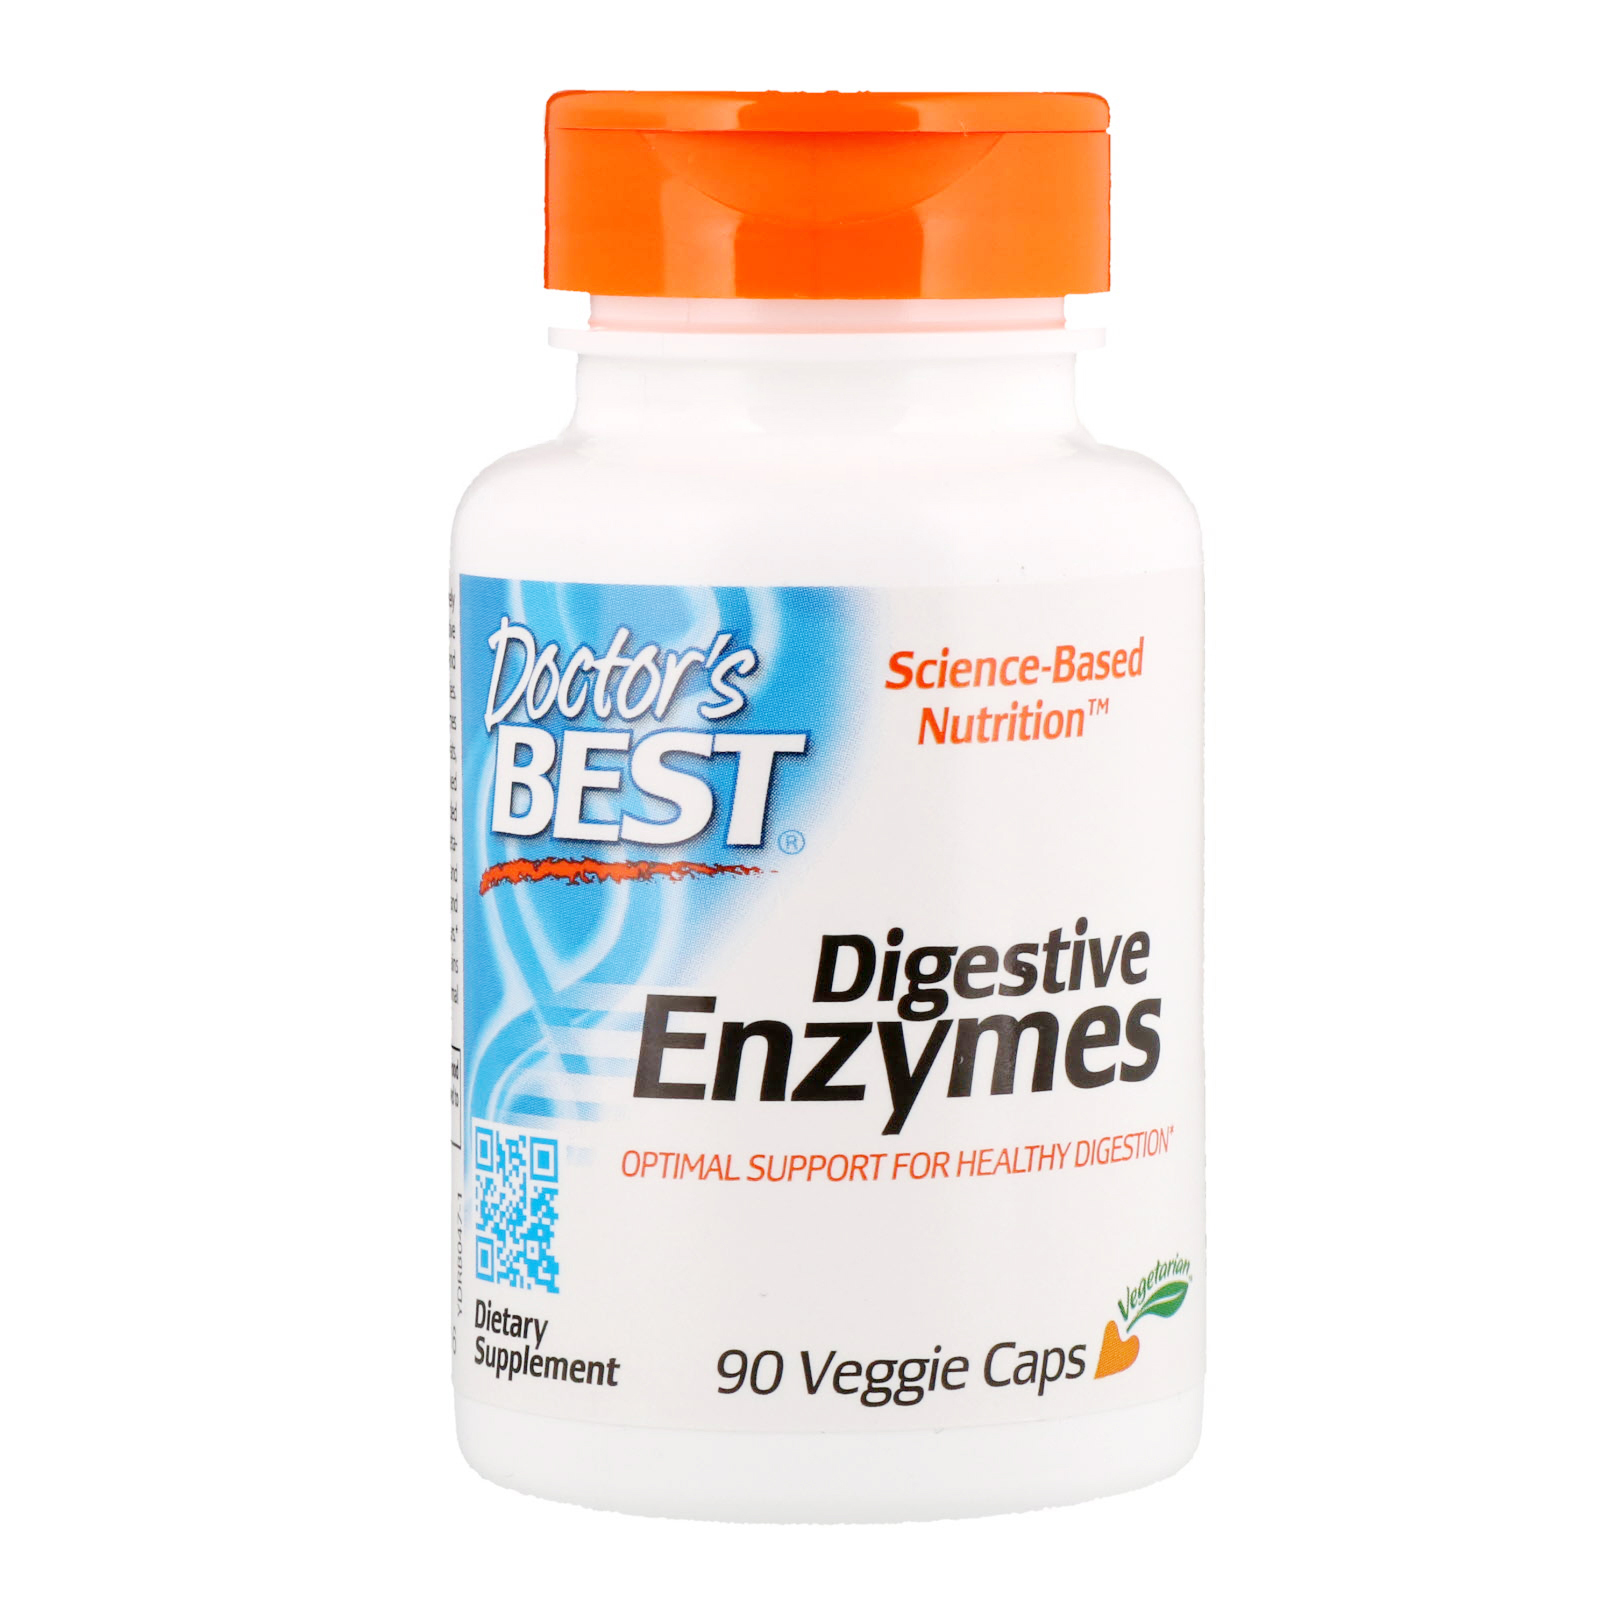 Dog Digestive Enzyme Supplement - Best Plant Based Digestive Enzyme Supplement